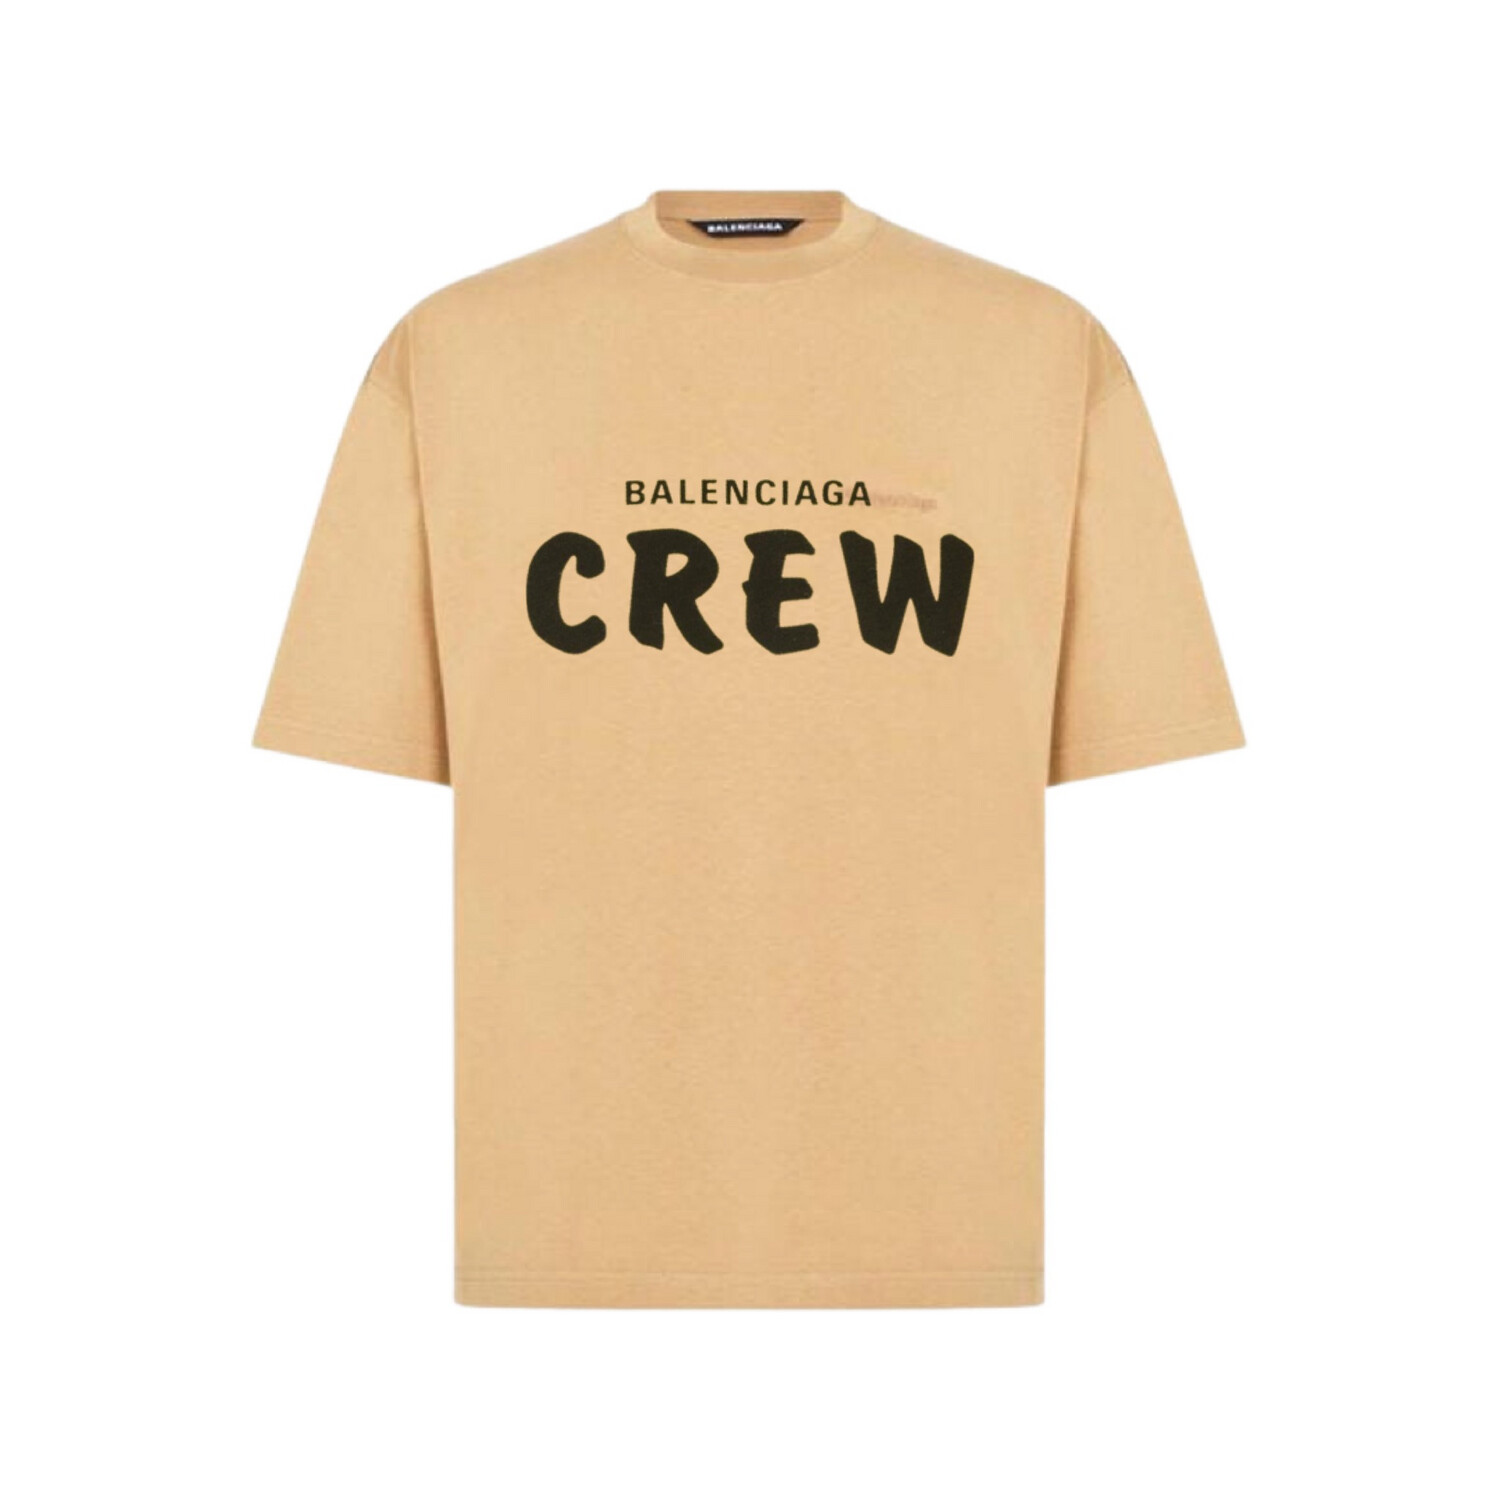 BALENCIAGA
Crew Cotton Oversized T-Shirt Beige